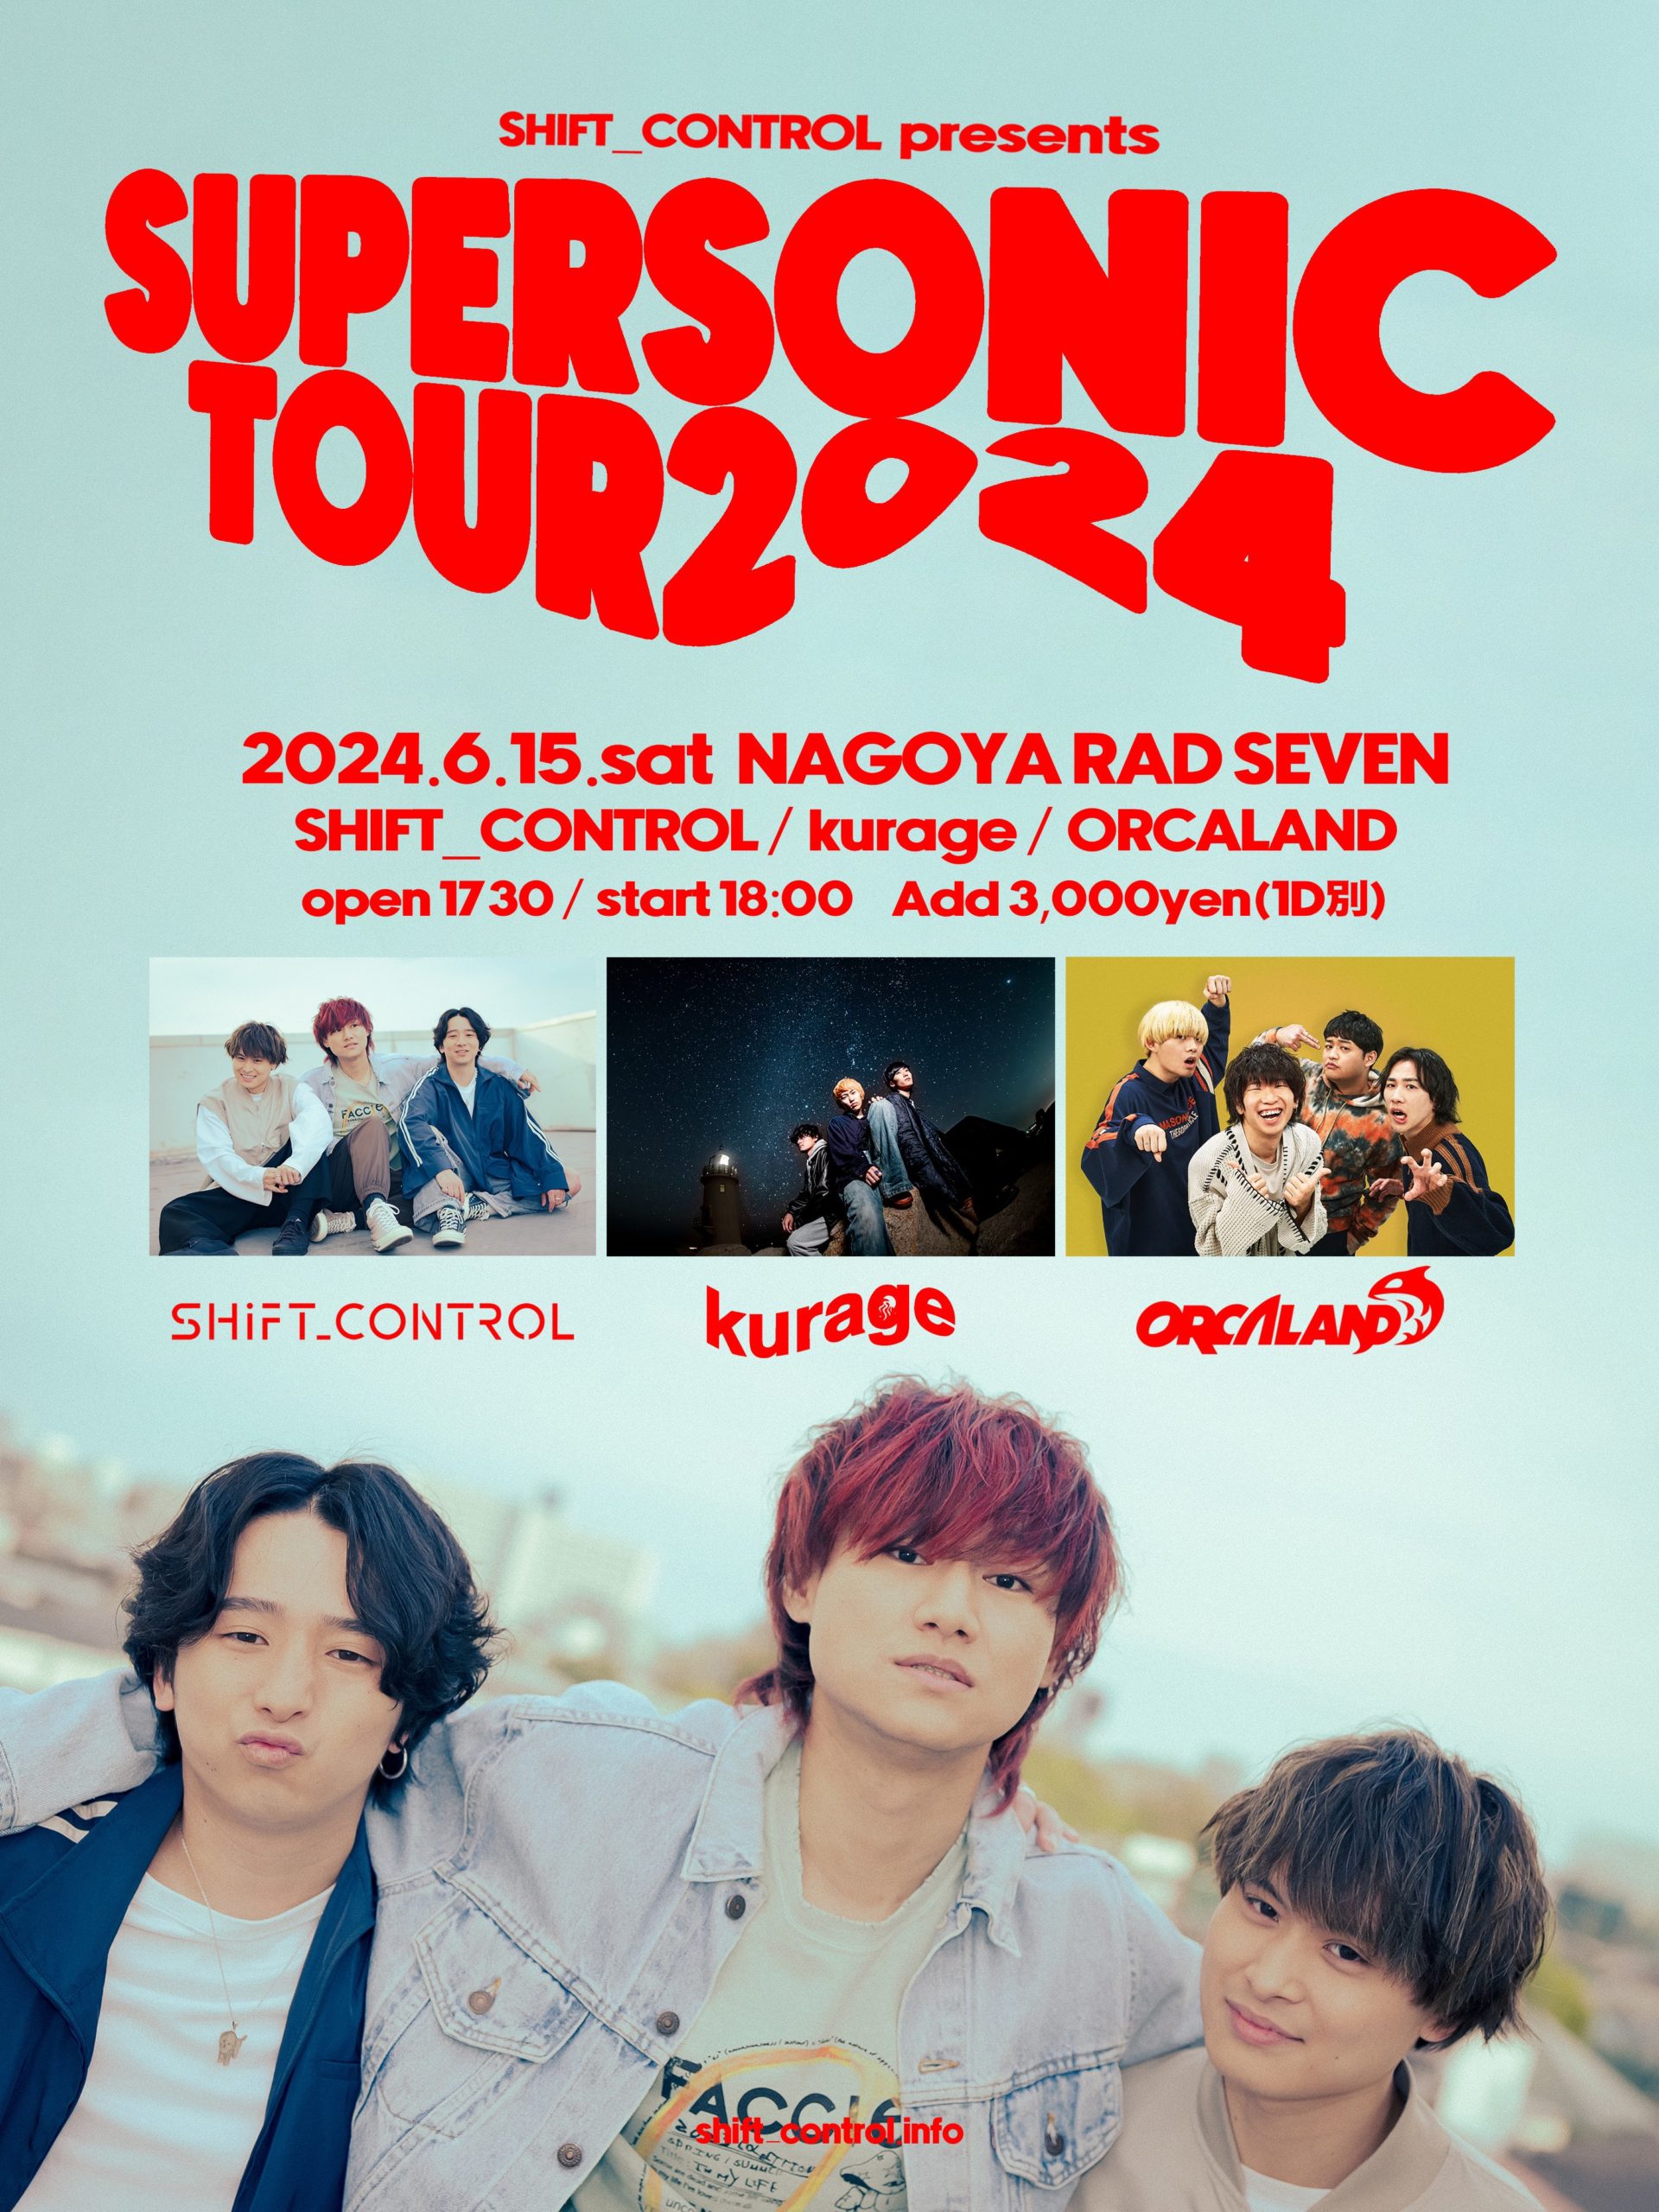 SHIFT_CONTROL presents SUPERSONIC TOUR 2024